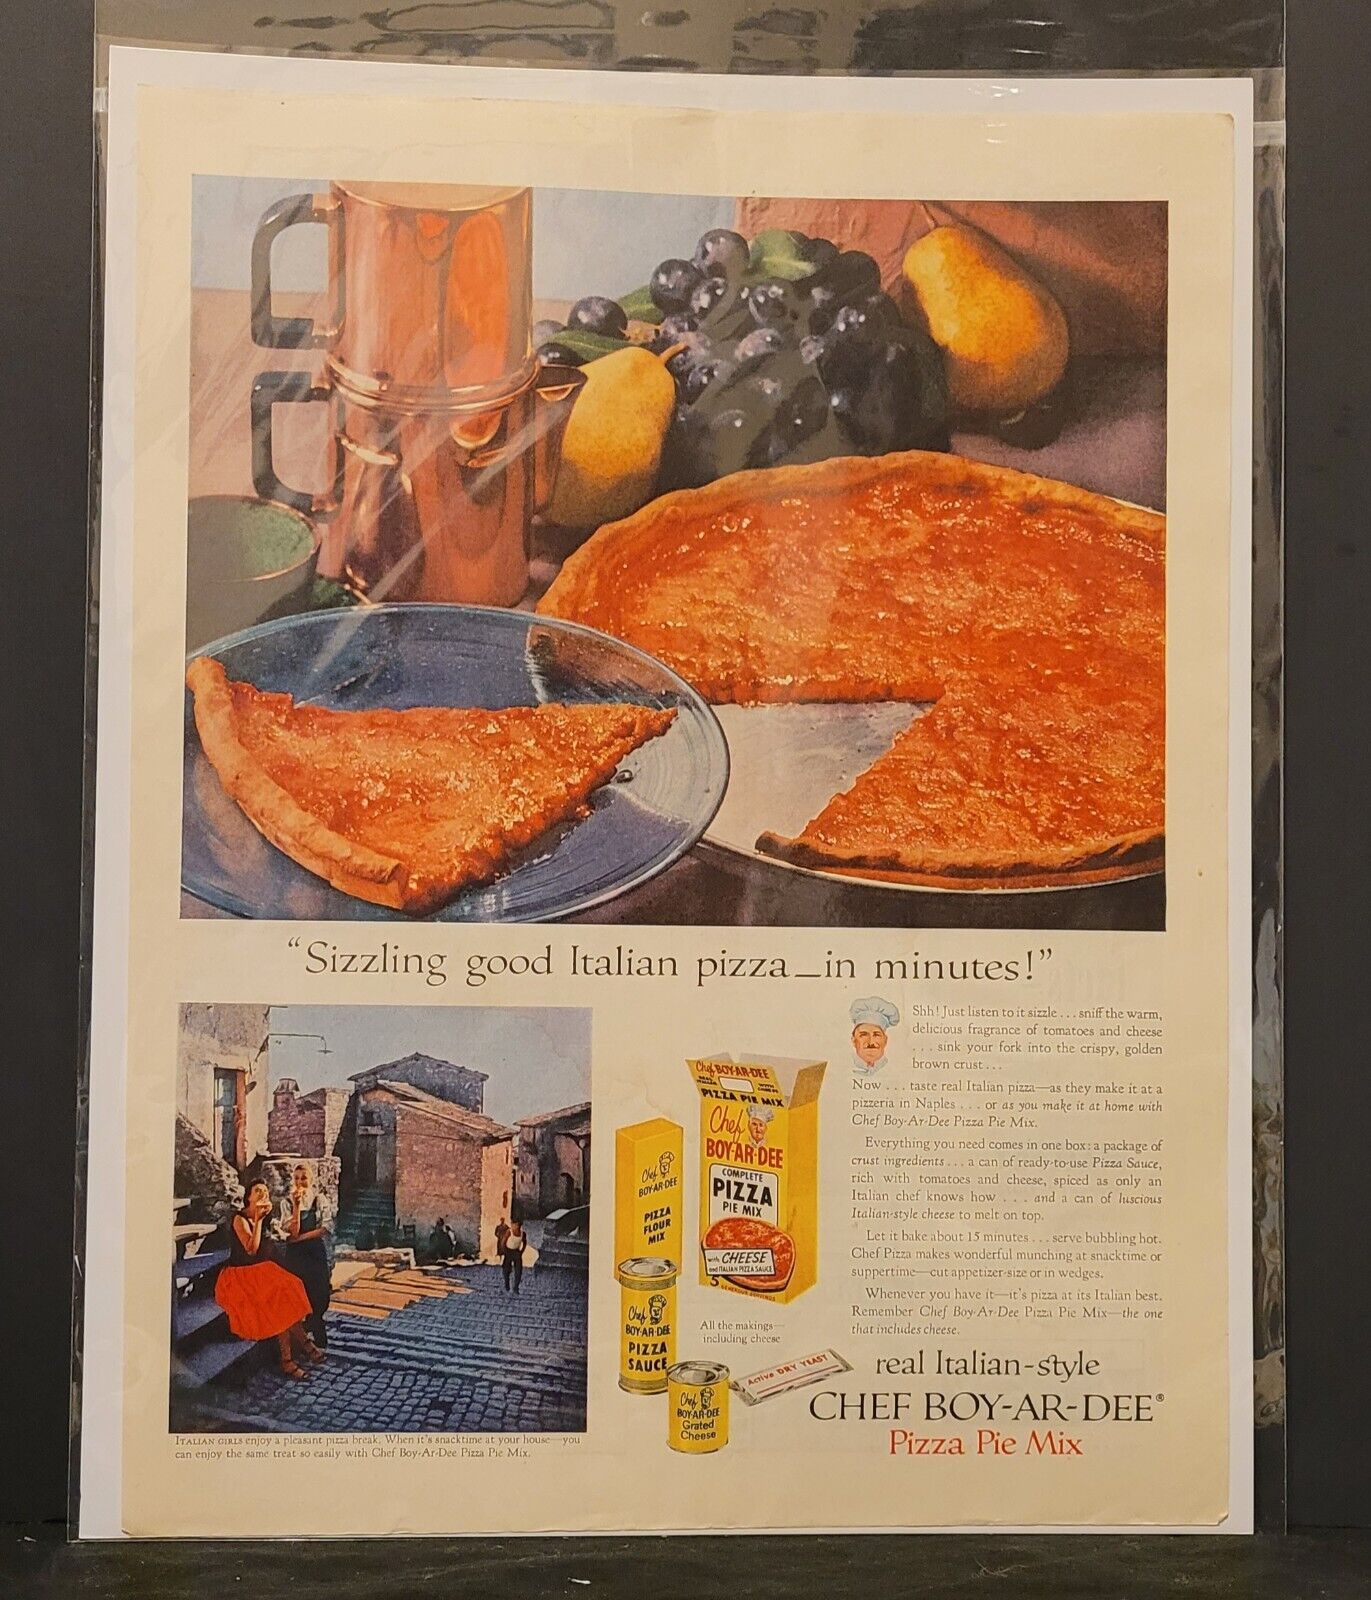 Chef Boy-Ar-Dee Complete Pizza Pie Mix Kit Vintage Print Ad 1957